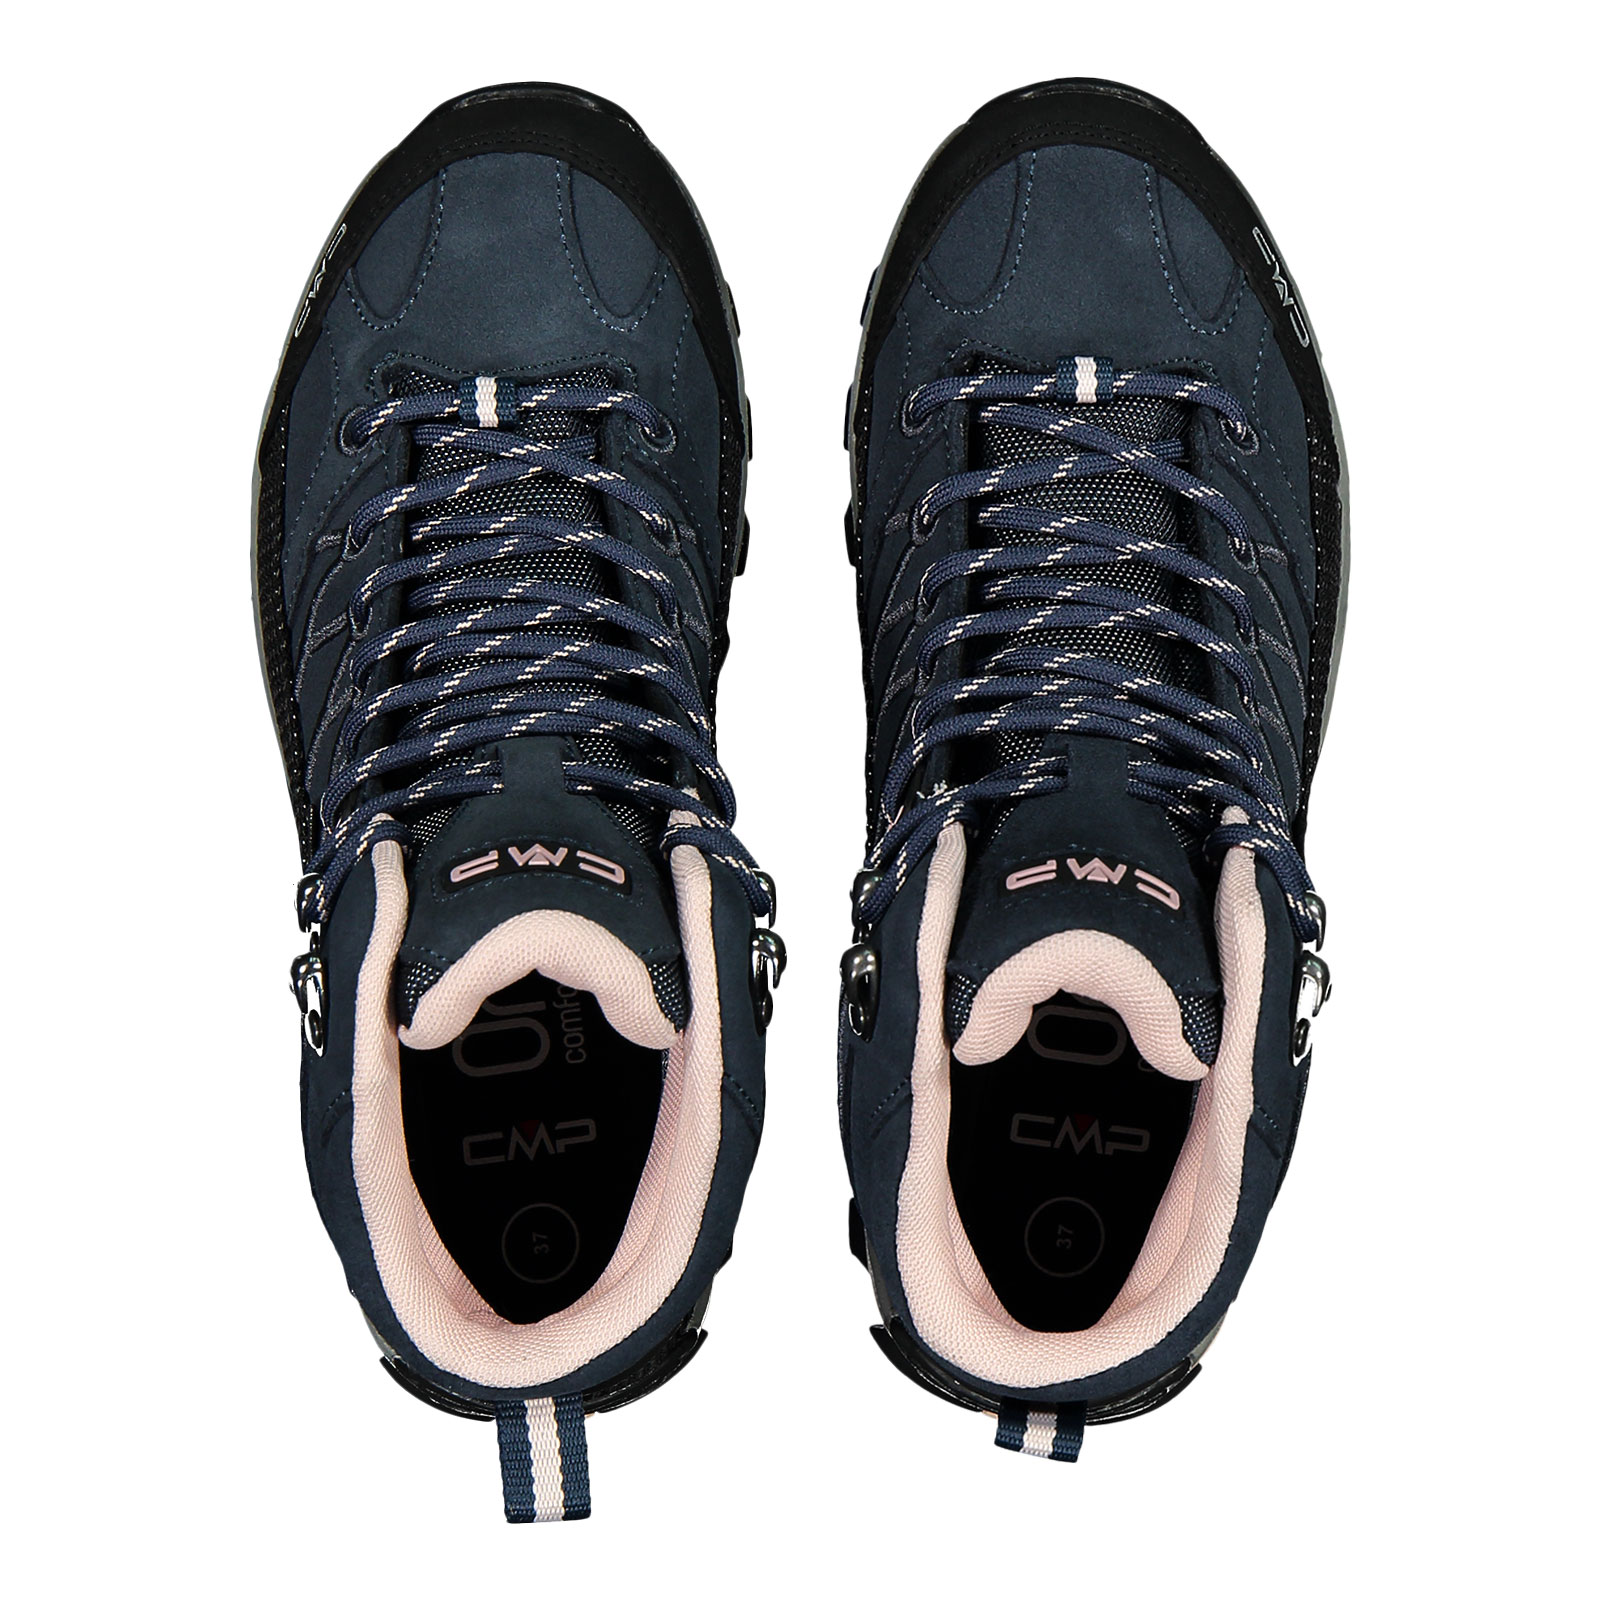 CMP Wanderschuhe Webshop MID Bonvenon | Shoes Waterproof Rigel